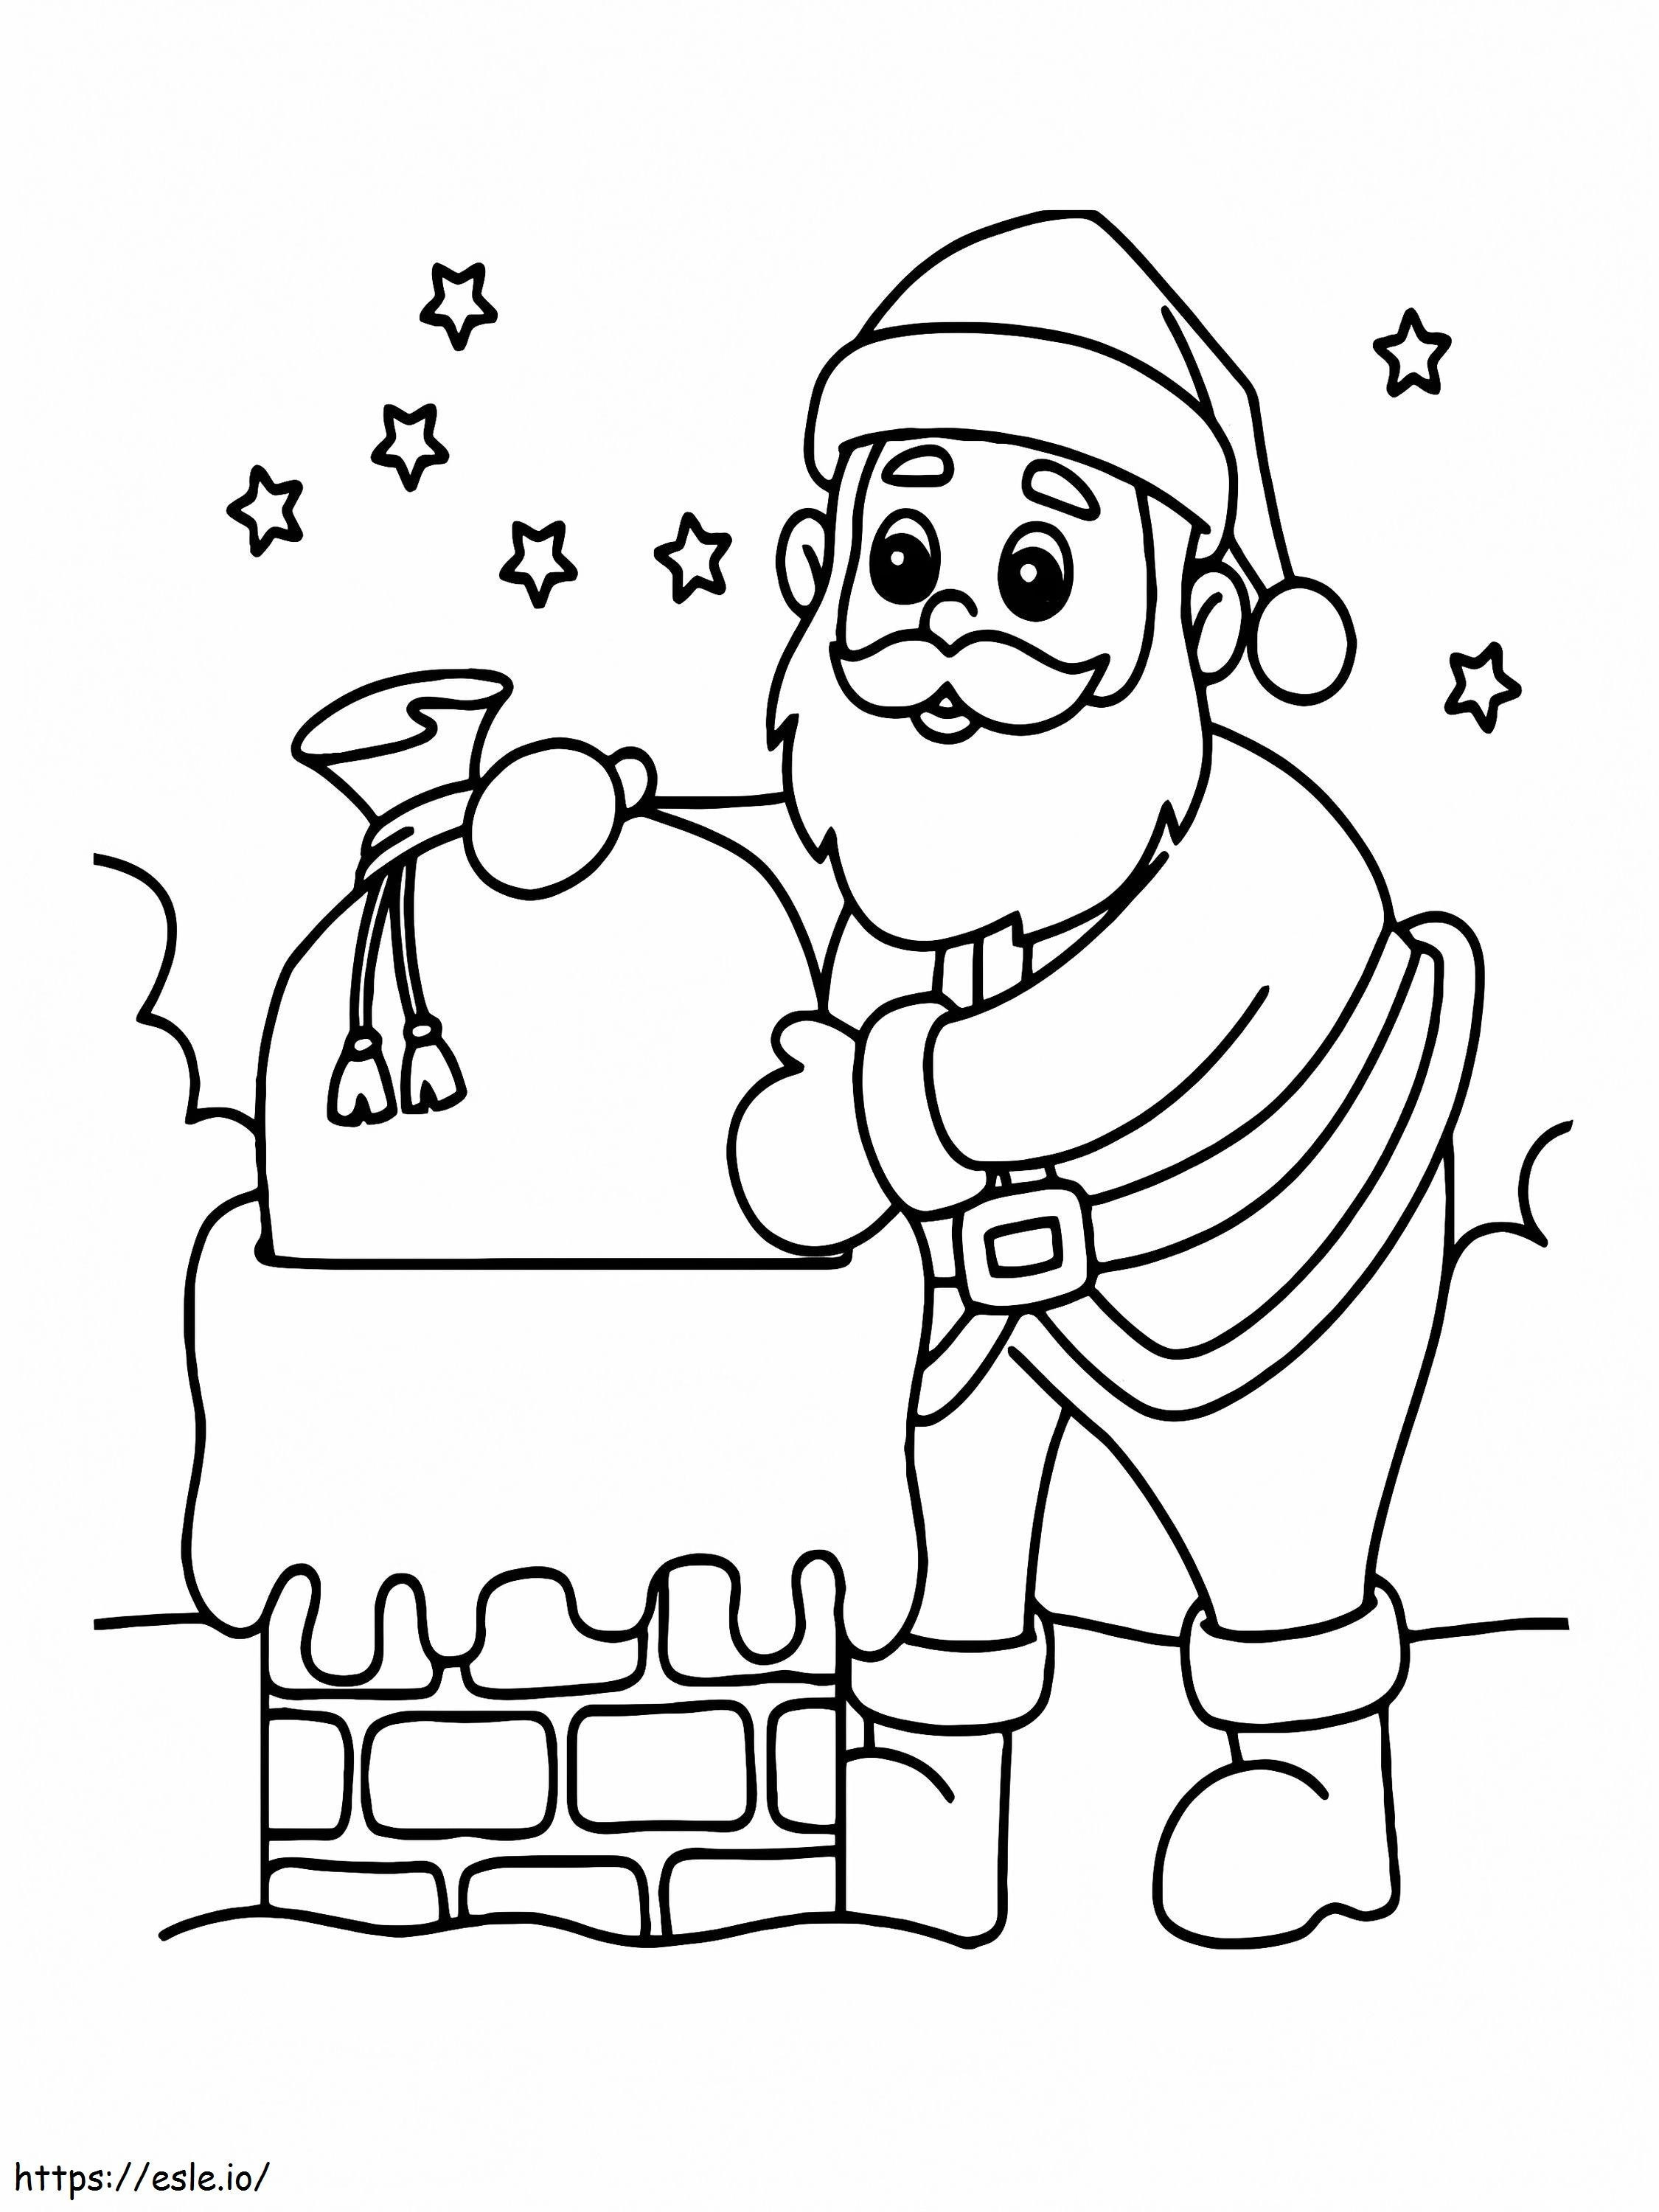 Santa Claus And Chimney coloring page